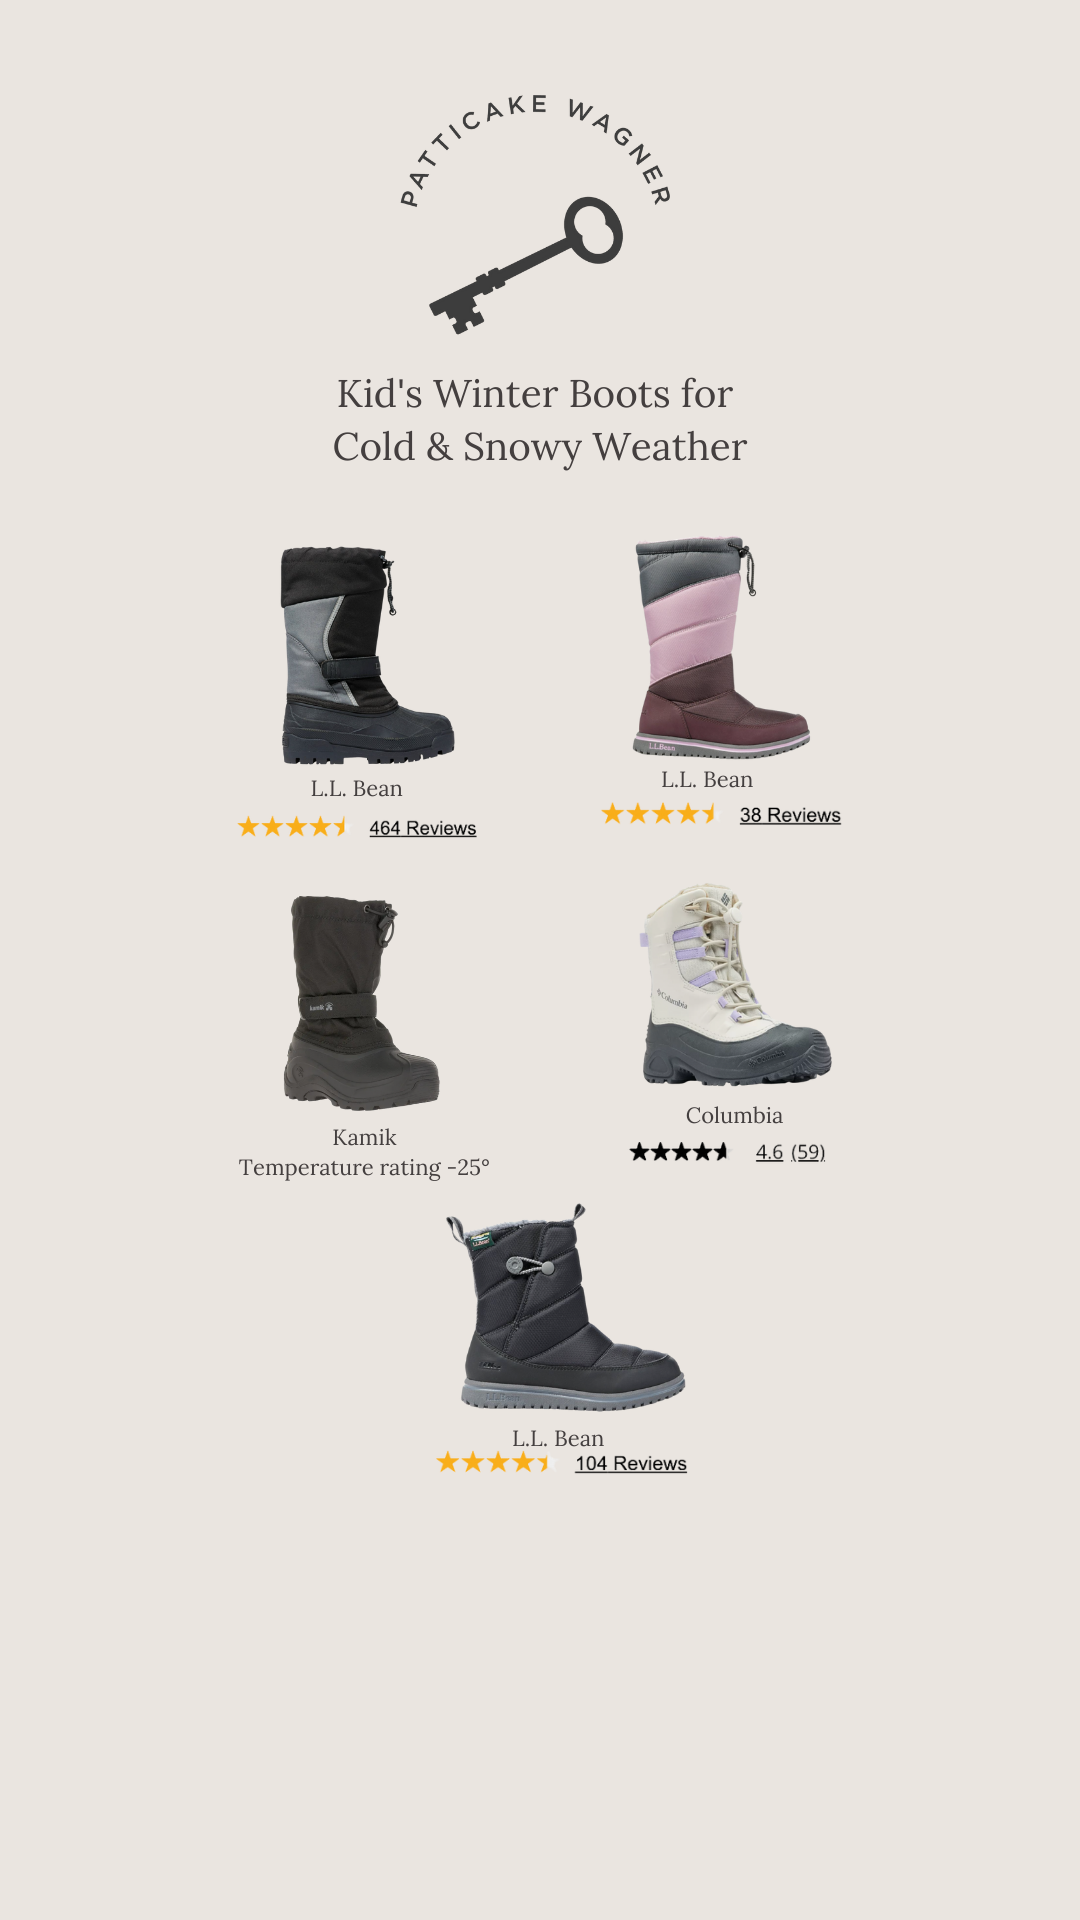 billige Originalprodukte Warmest Winter Boots for - & Wagner Climates Cold Patticake Snowy